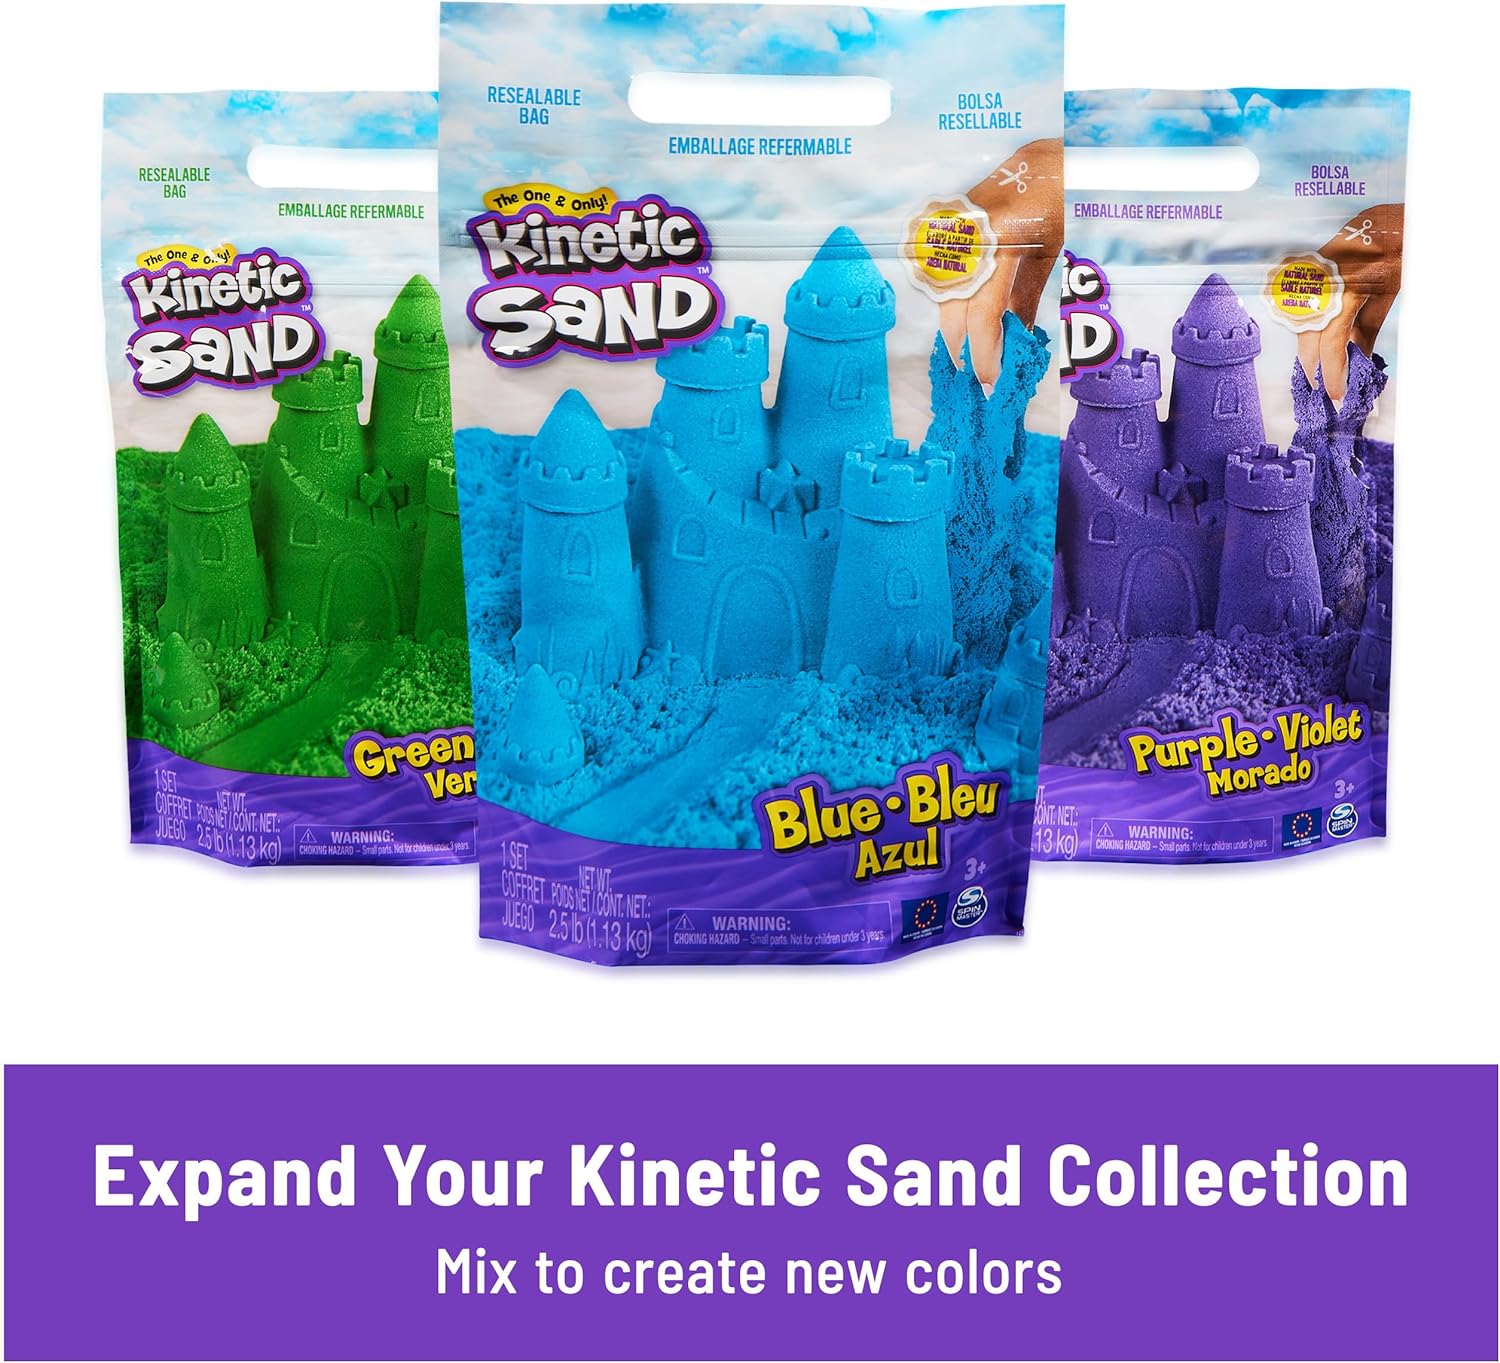 Kinetic Sand Ultimate Sandisfying Set, 2lb of Pink, Yellow and Teal Play Sand, 10 Molds and Tools, Sensory Toys, Christmas Gifts for Kids